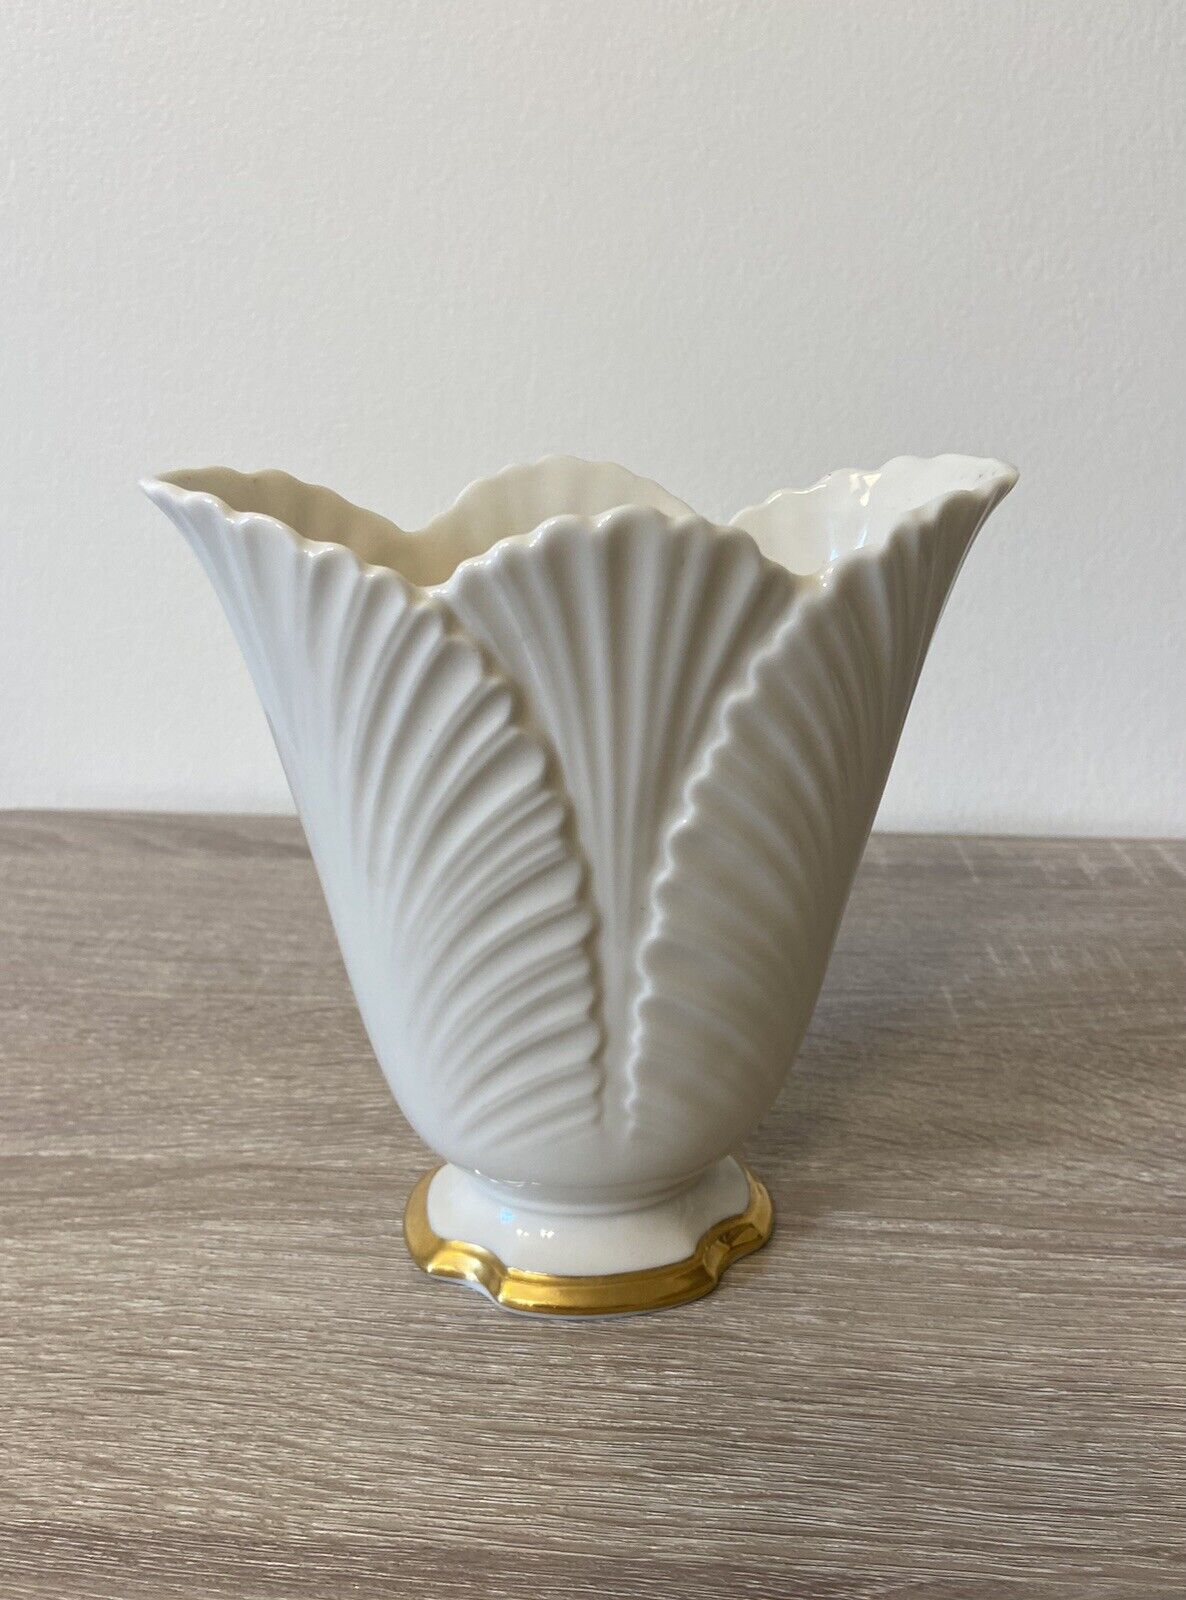 Lenox Vase Gold Trim 6.5 inches tall